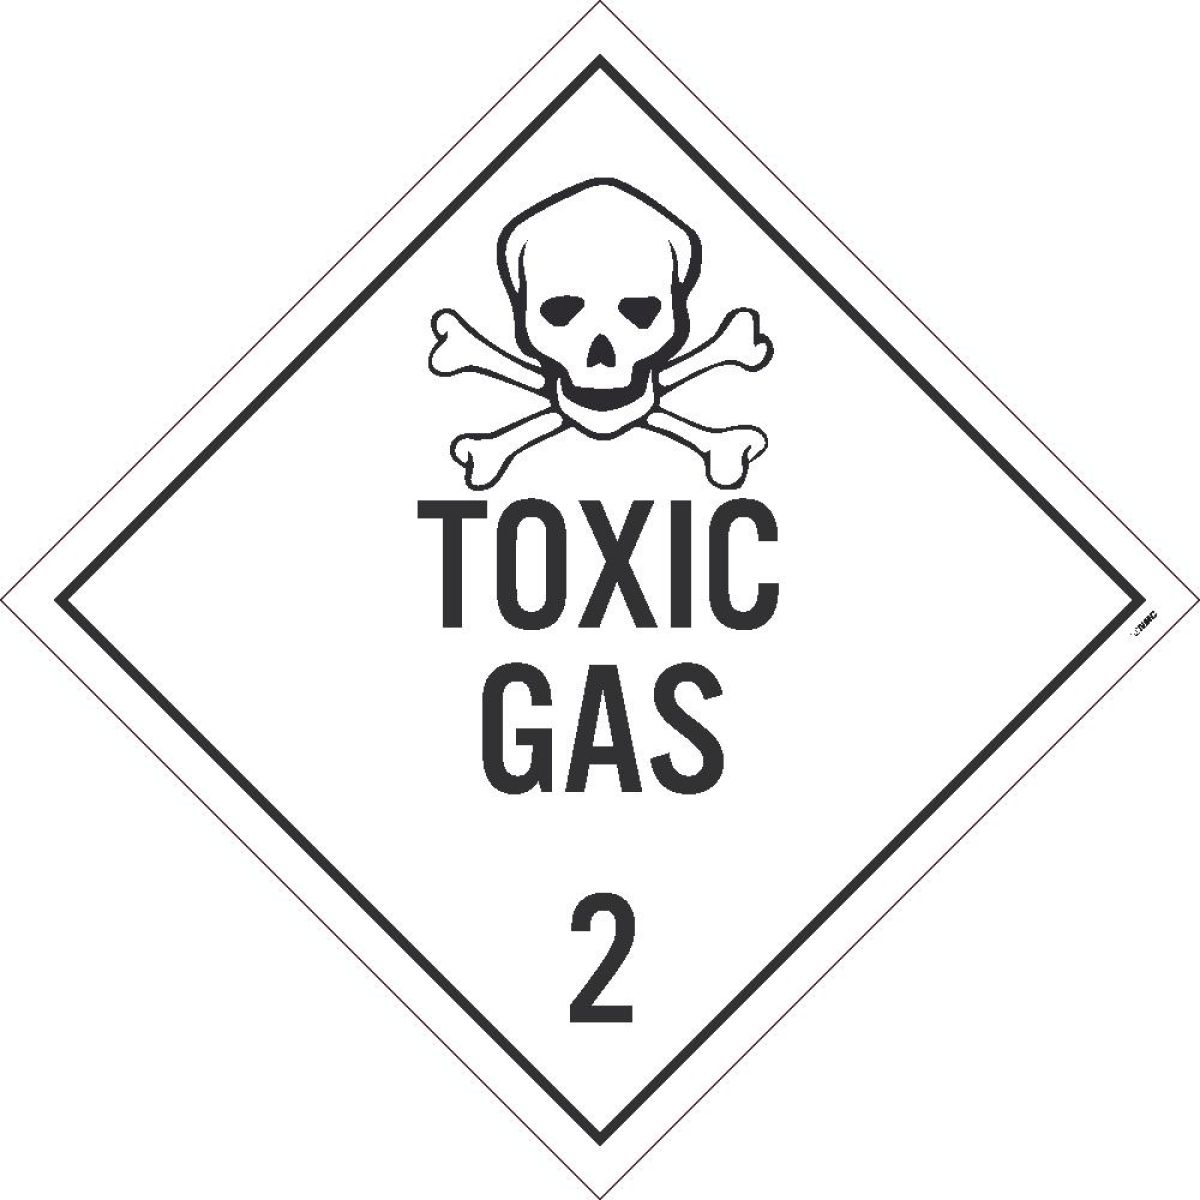 TOXIC GAS 2 DOT PLACARD SIGN